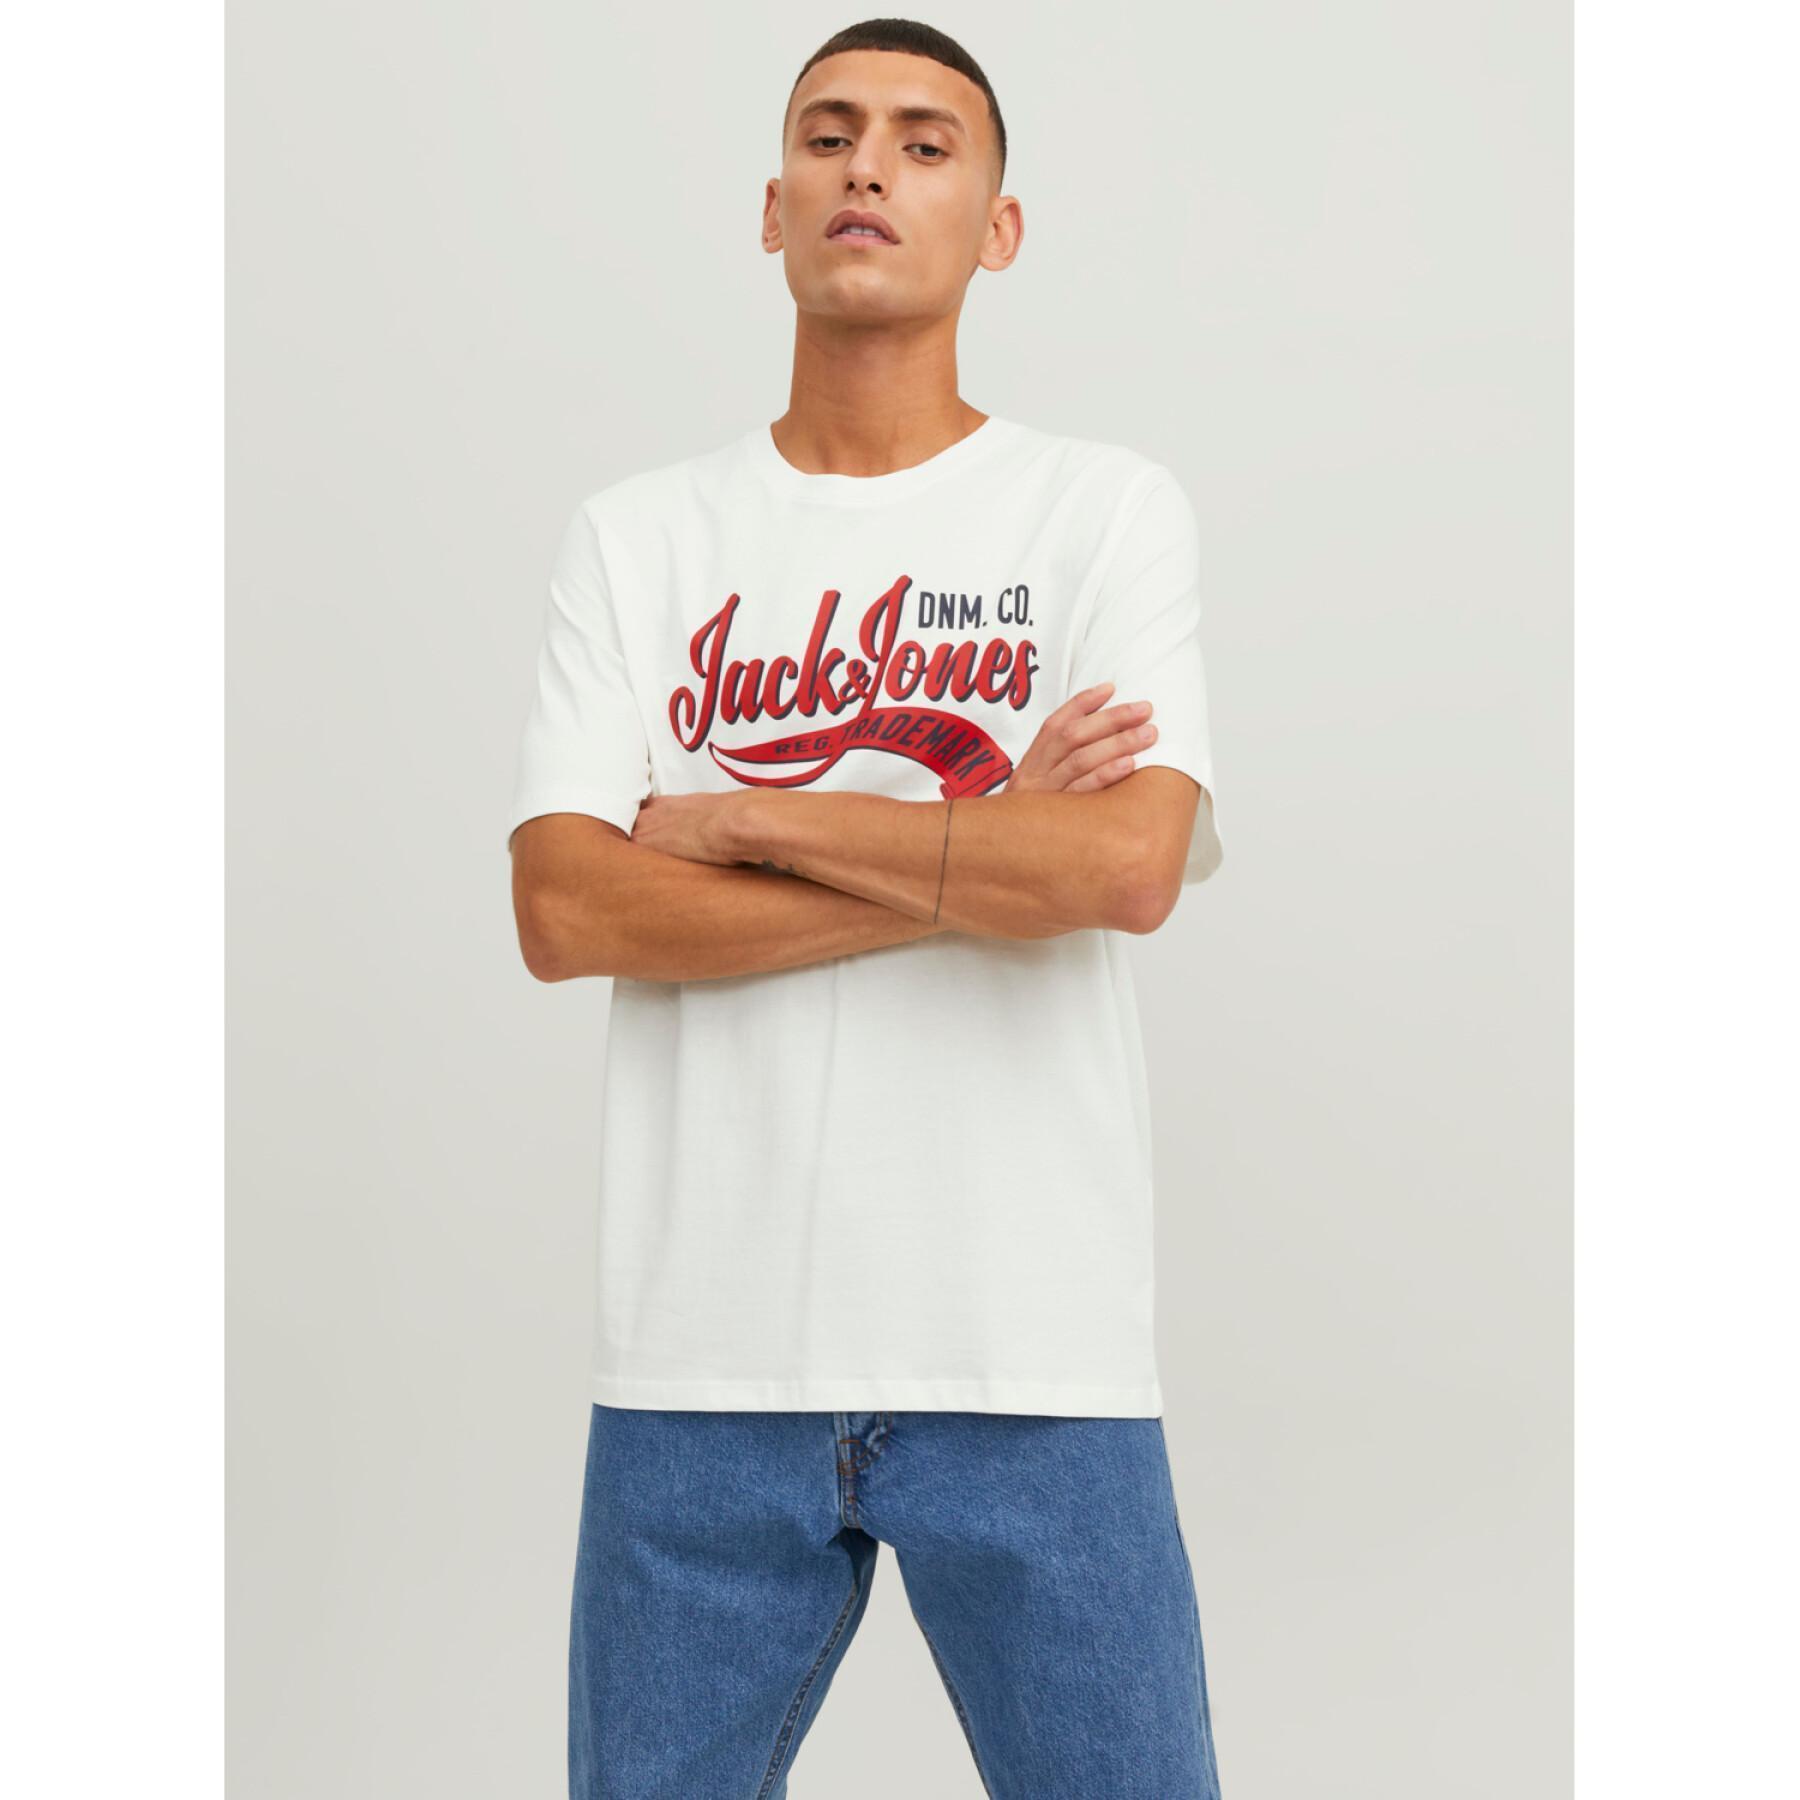 T-Shirt Jack & Jones